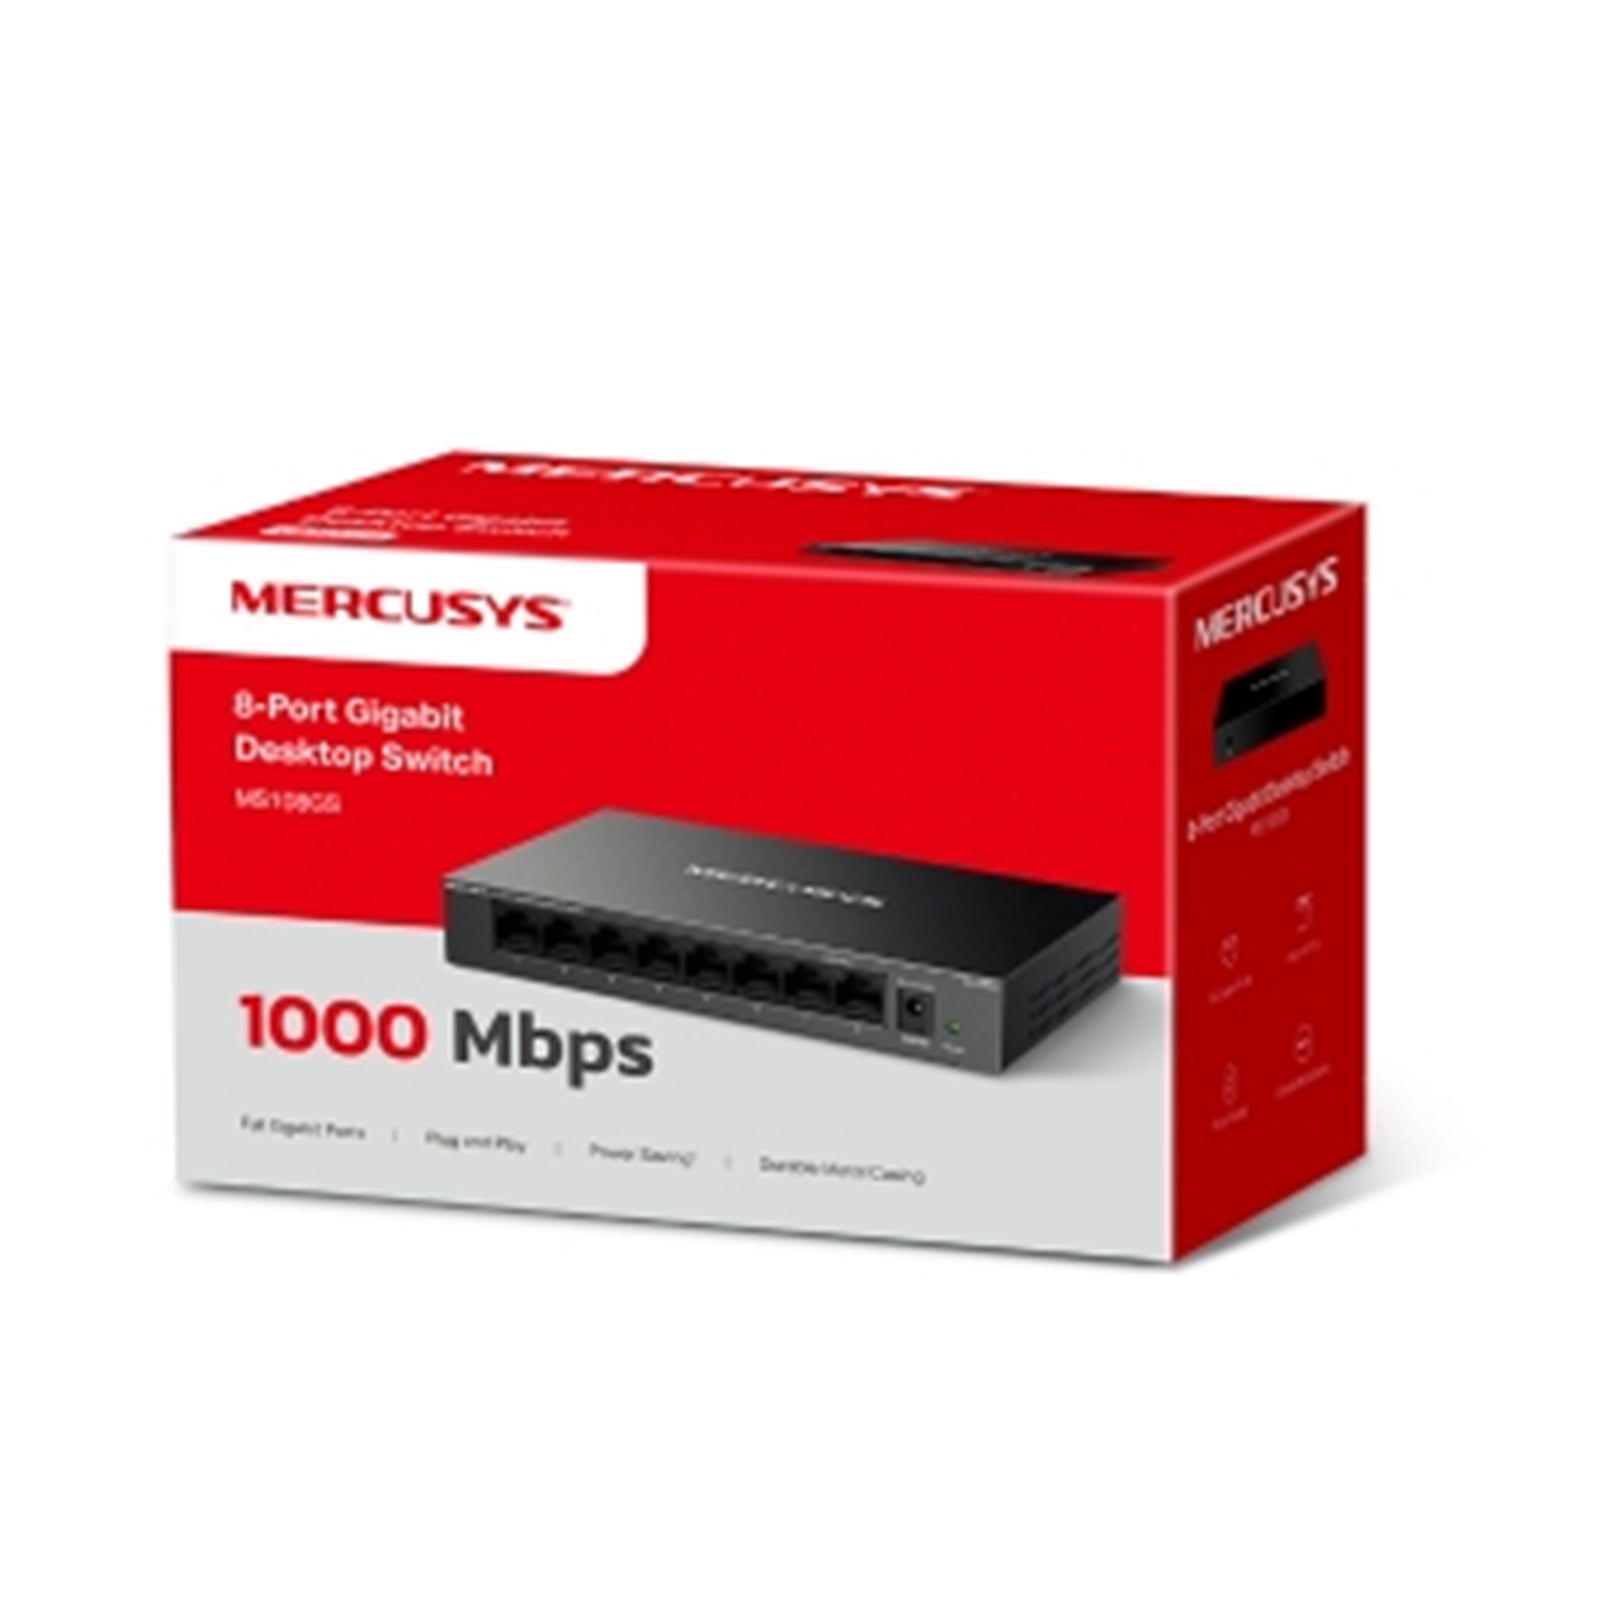 Mercusys MS108GS 8-Port Gigabit Desktop Switch - High-Speed, Energy-Efficient Ethernet Solution